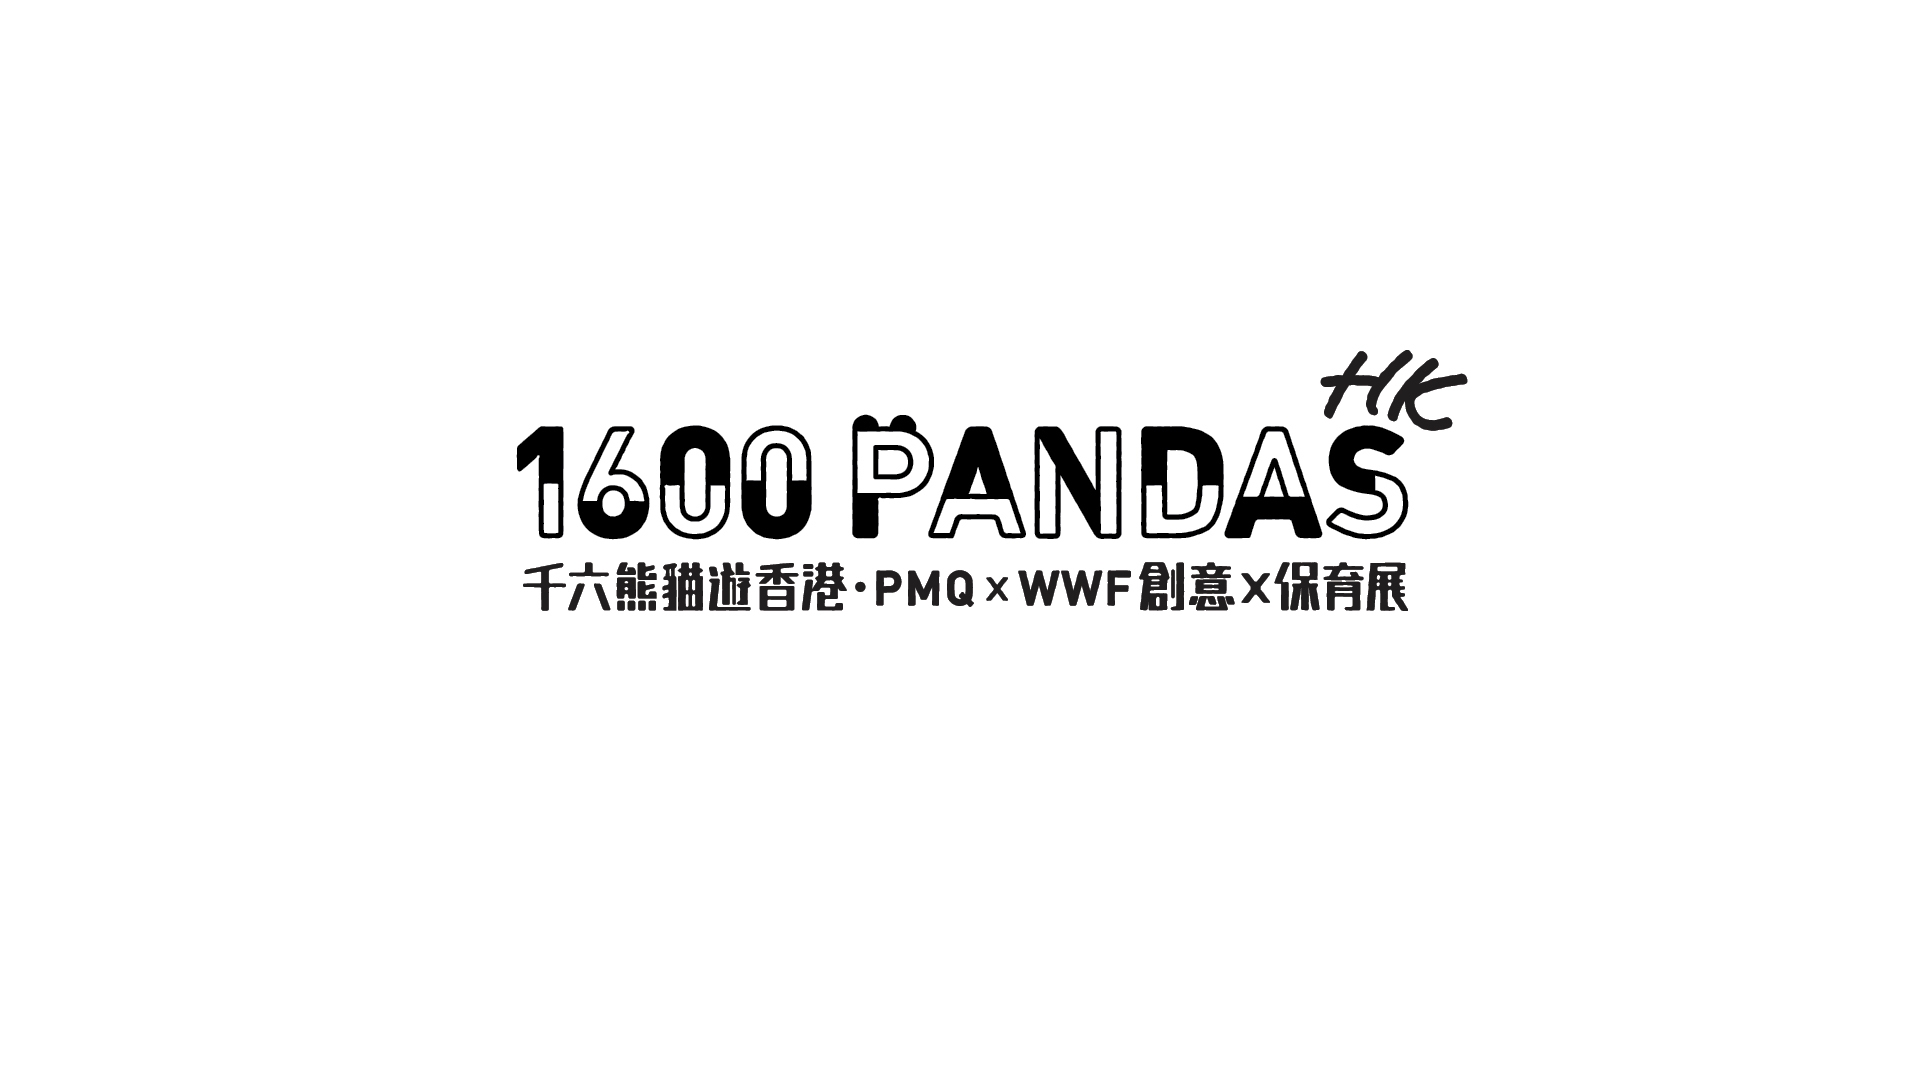 1600 PANDAS+ WORLD TOUR